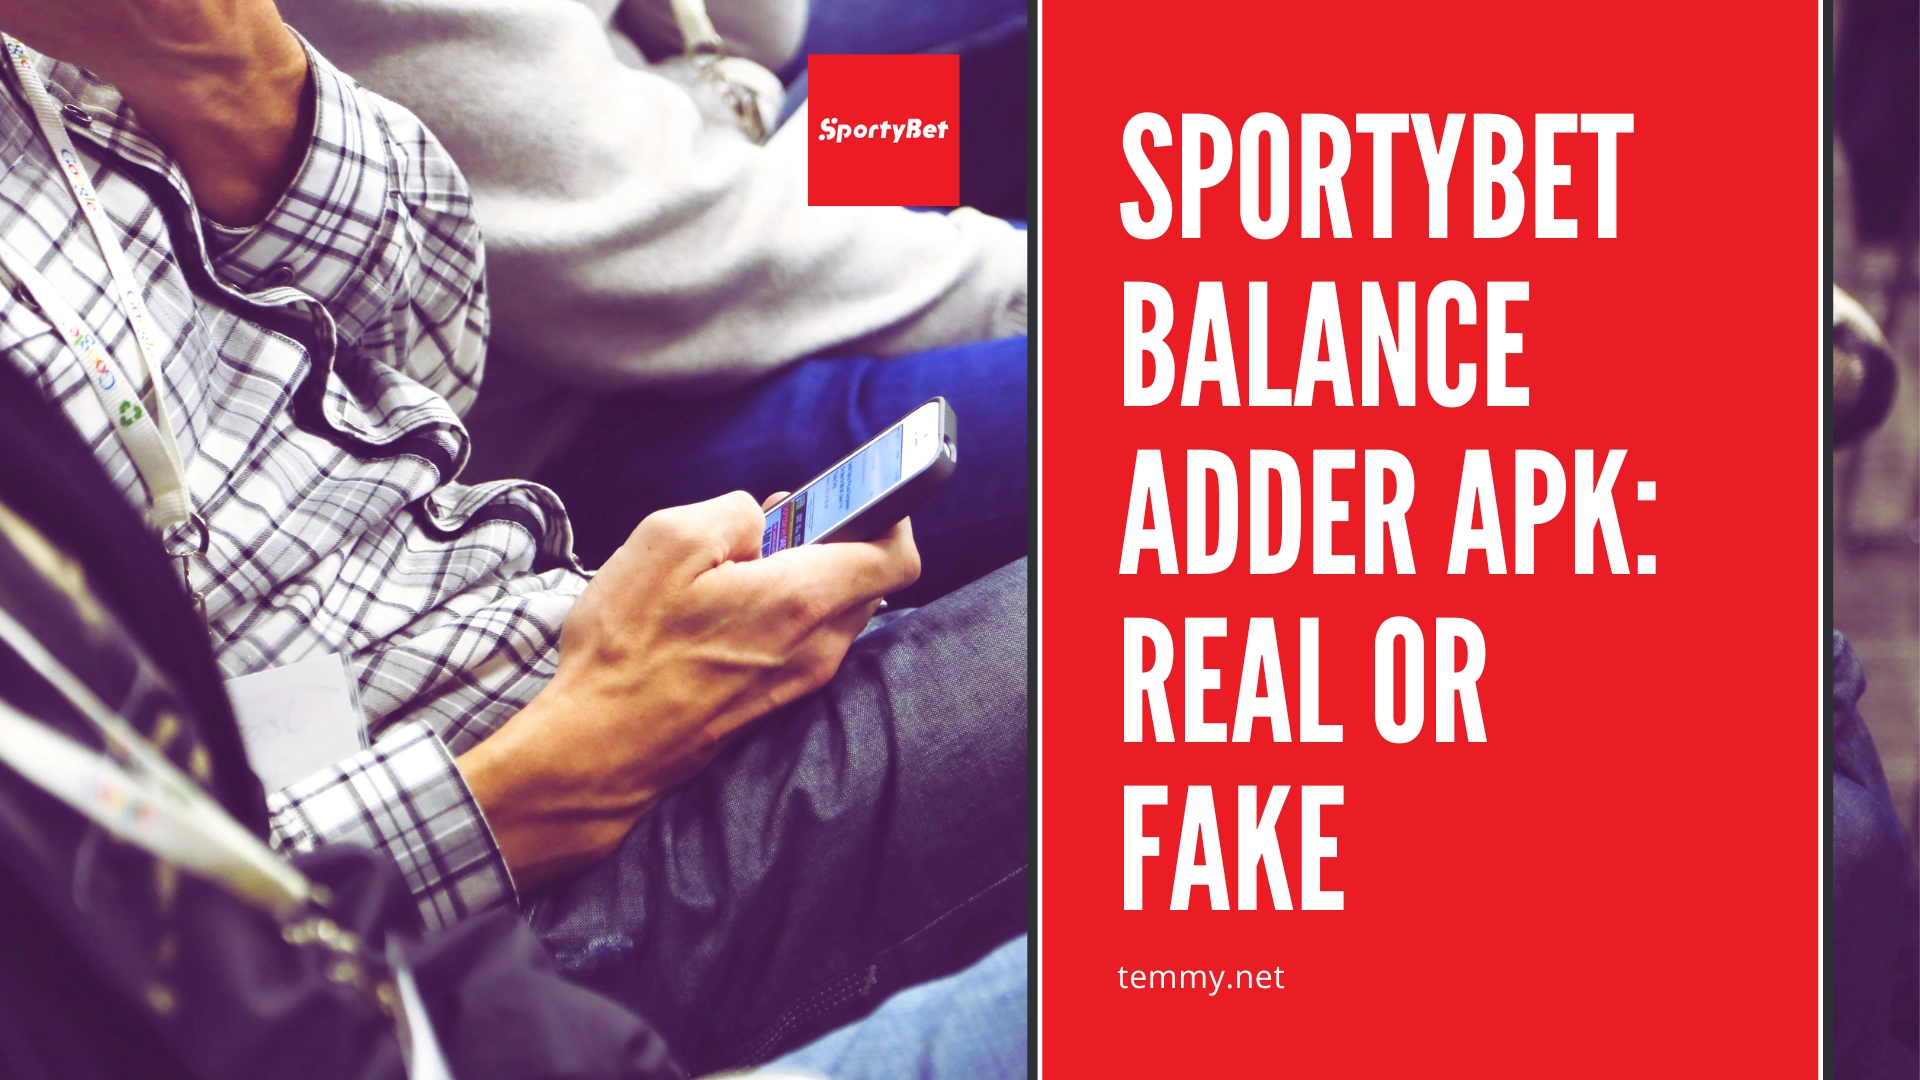 sportybet balance adder apk real or fake